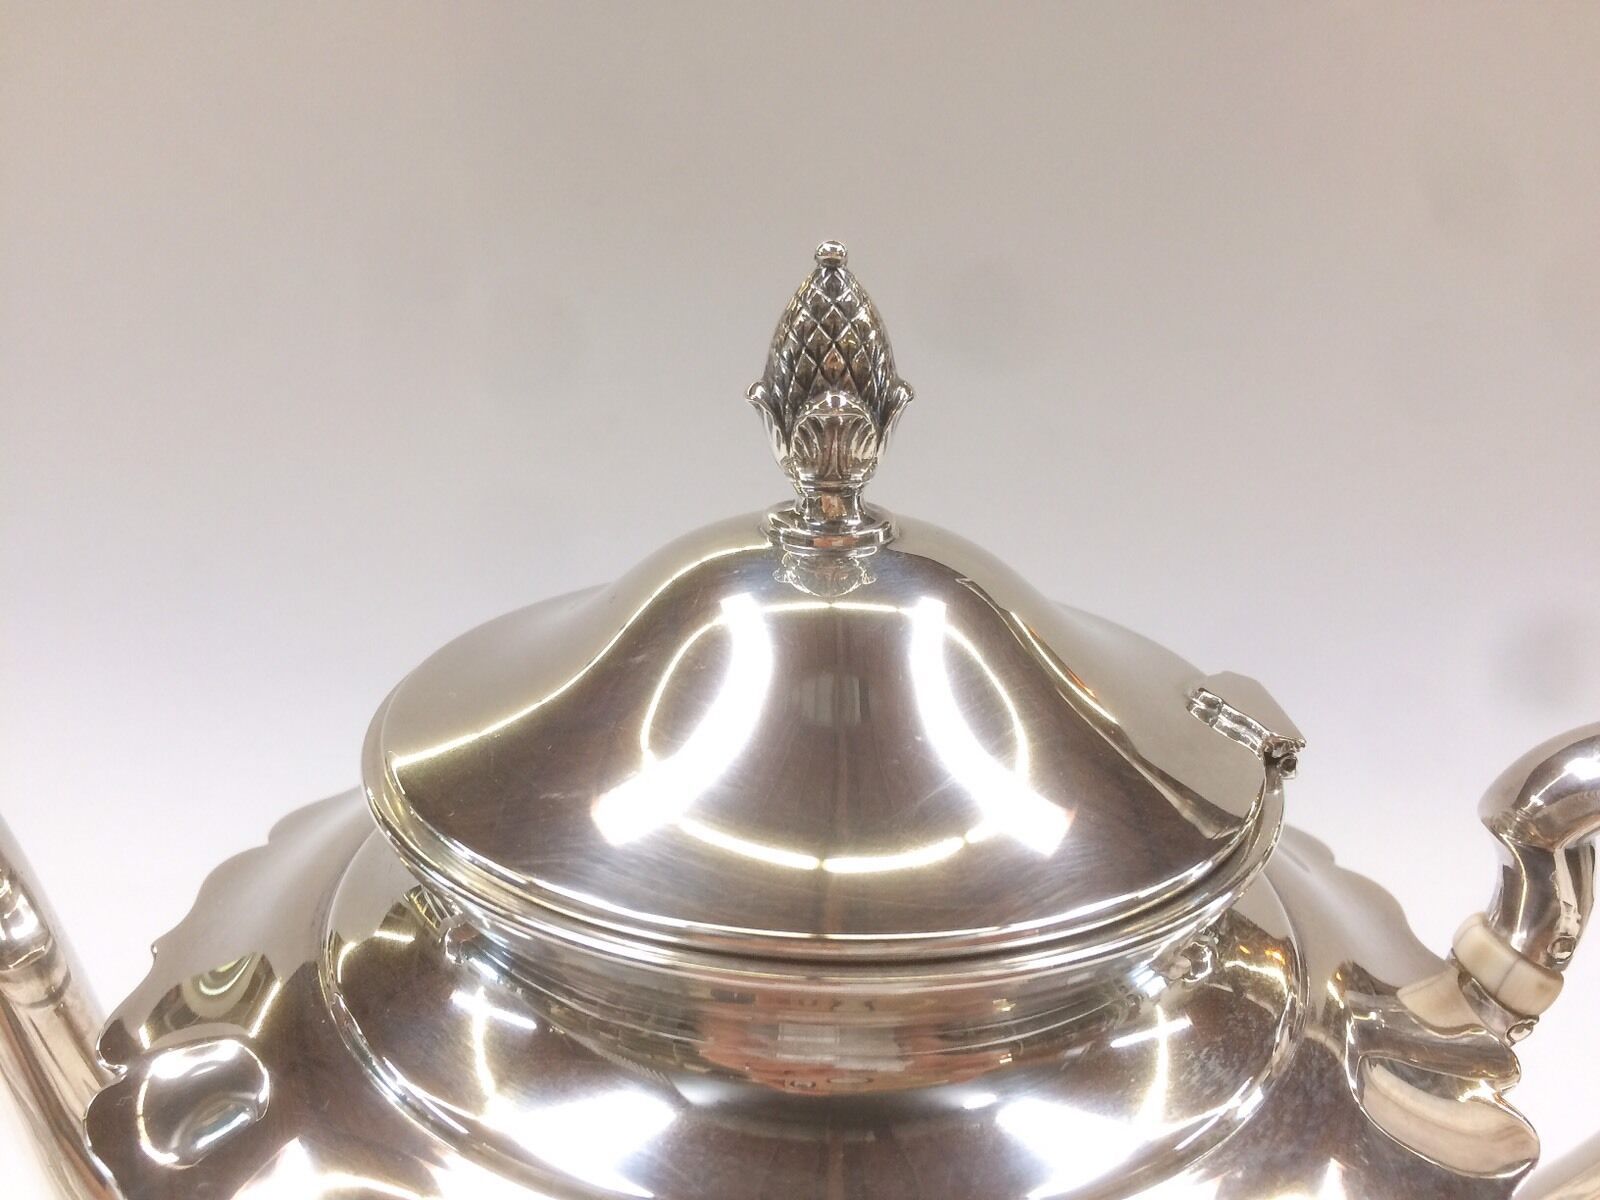 Vintage metal tea set consisting of a tea pot, sugar bowl and creamer on a  tray - Shop L&R Antiques and Curiosa Teapots & Teacups - Pinkoi